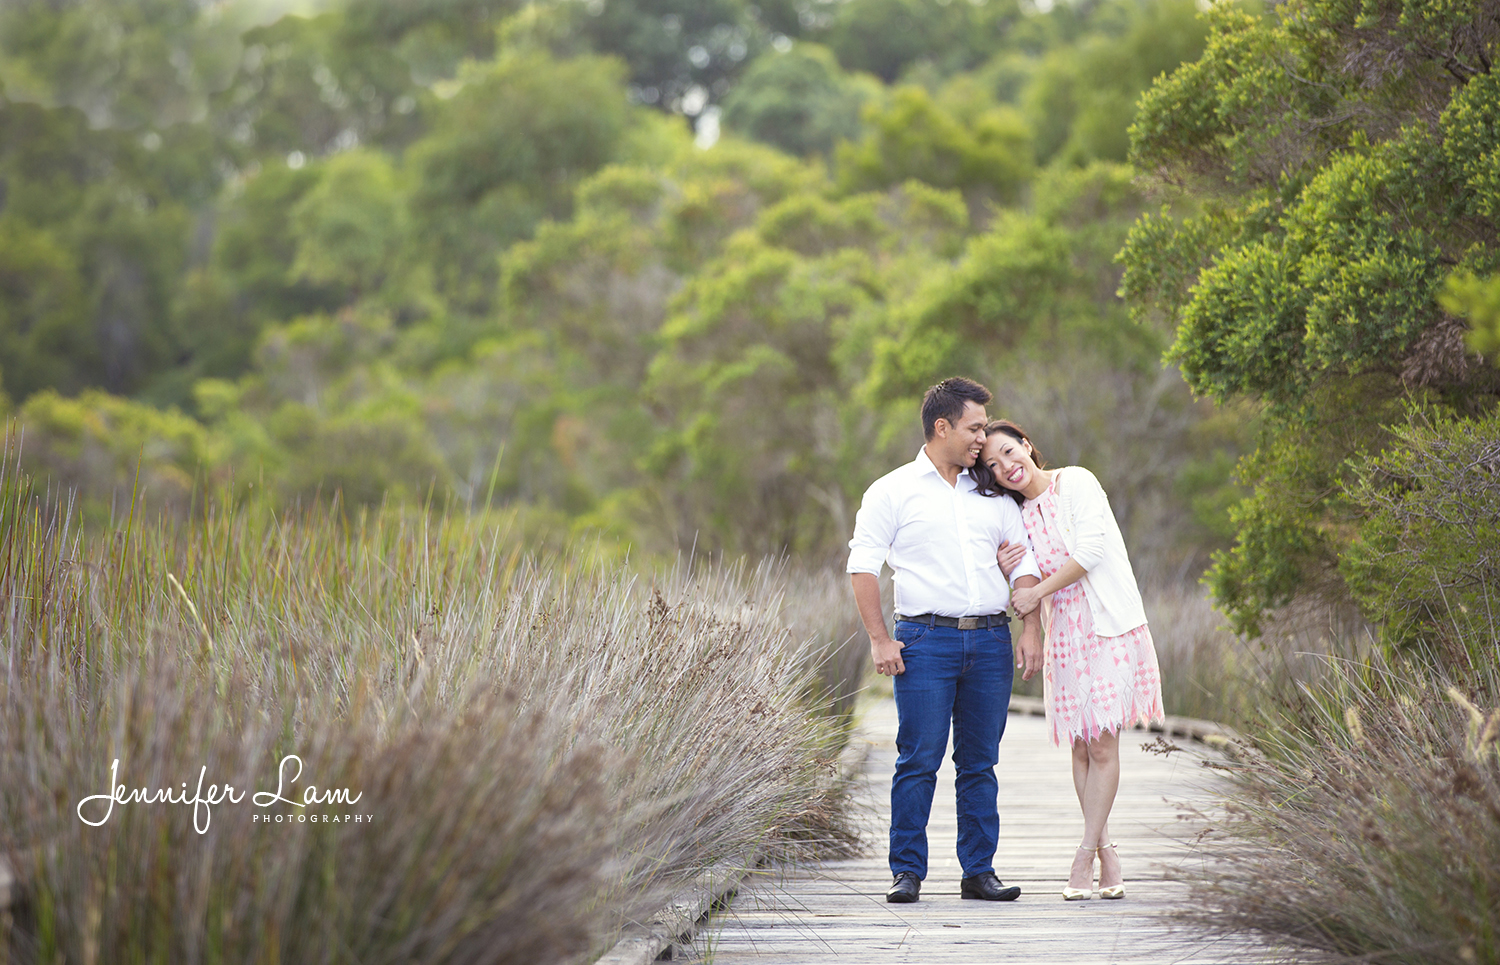 Sydney Wedding Photographer - Jennifer Lam Photography (12).jpg